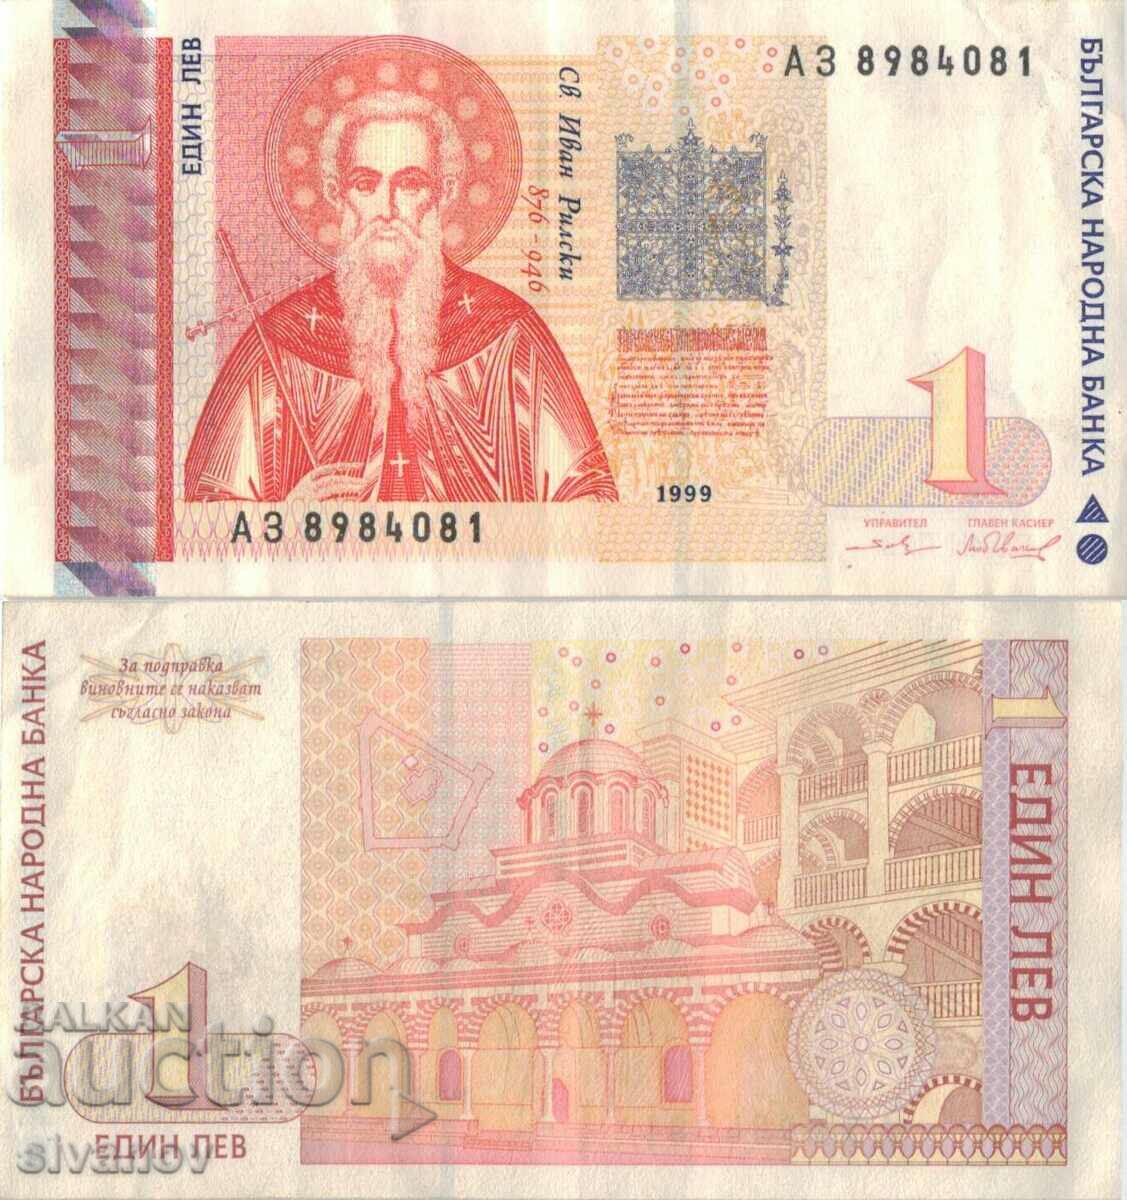 Bulgaria 1 lev 1999 banknote #5347